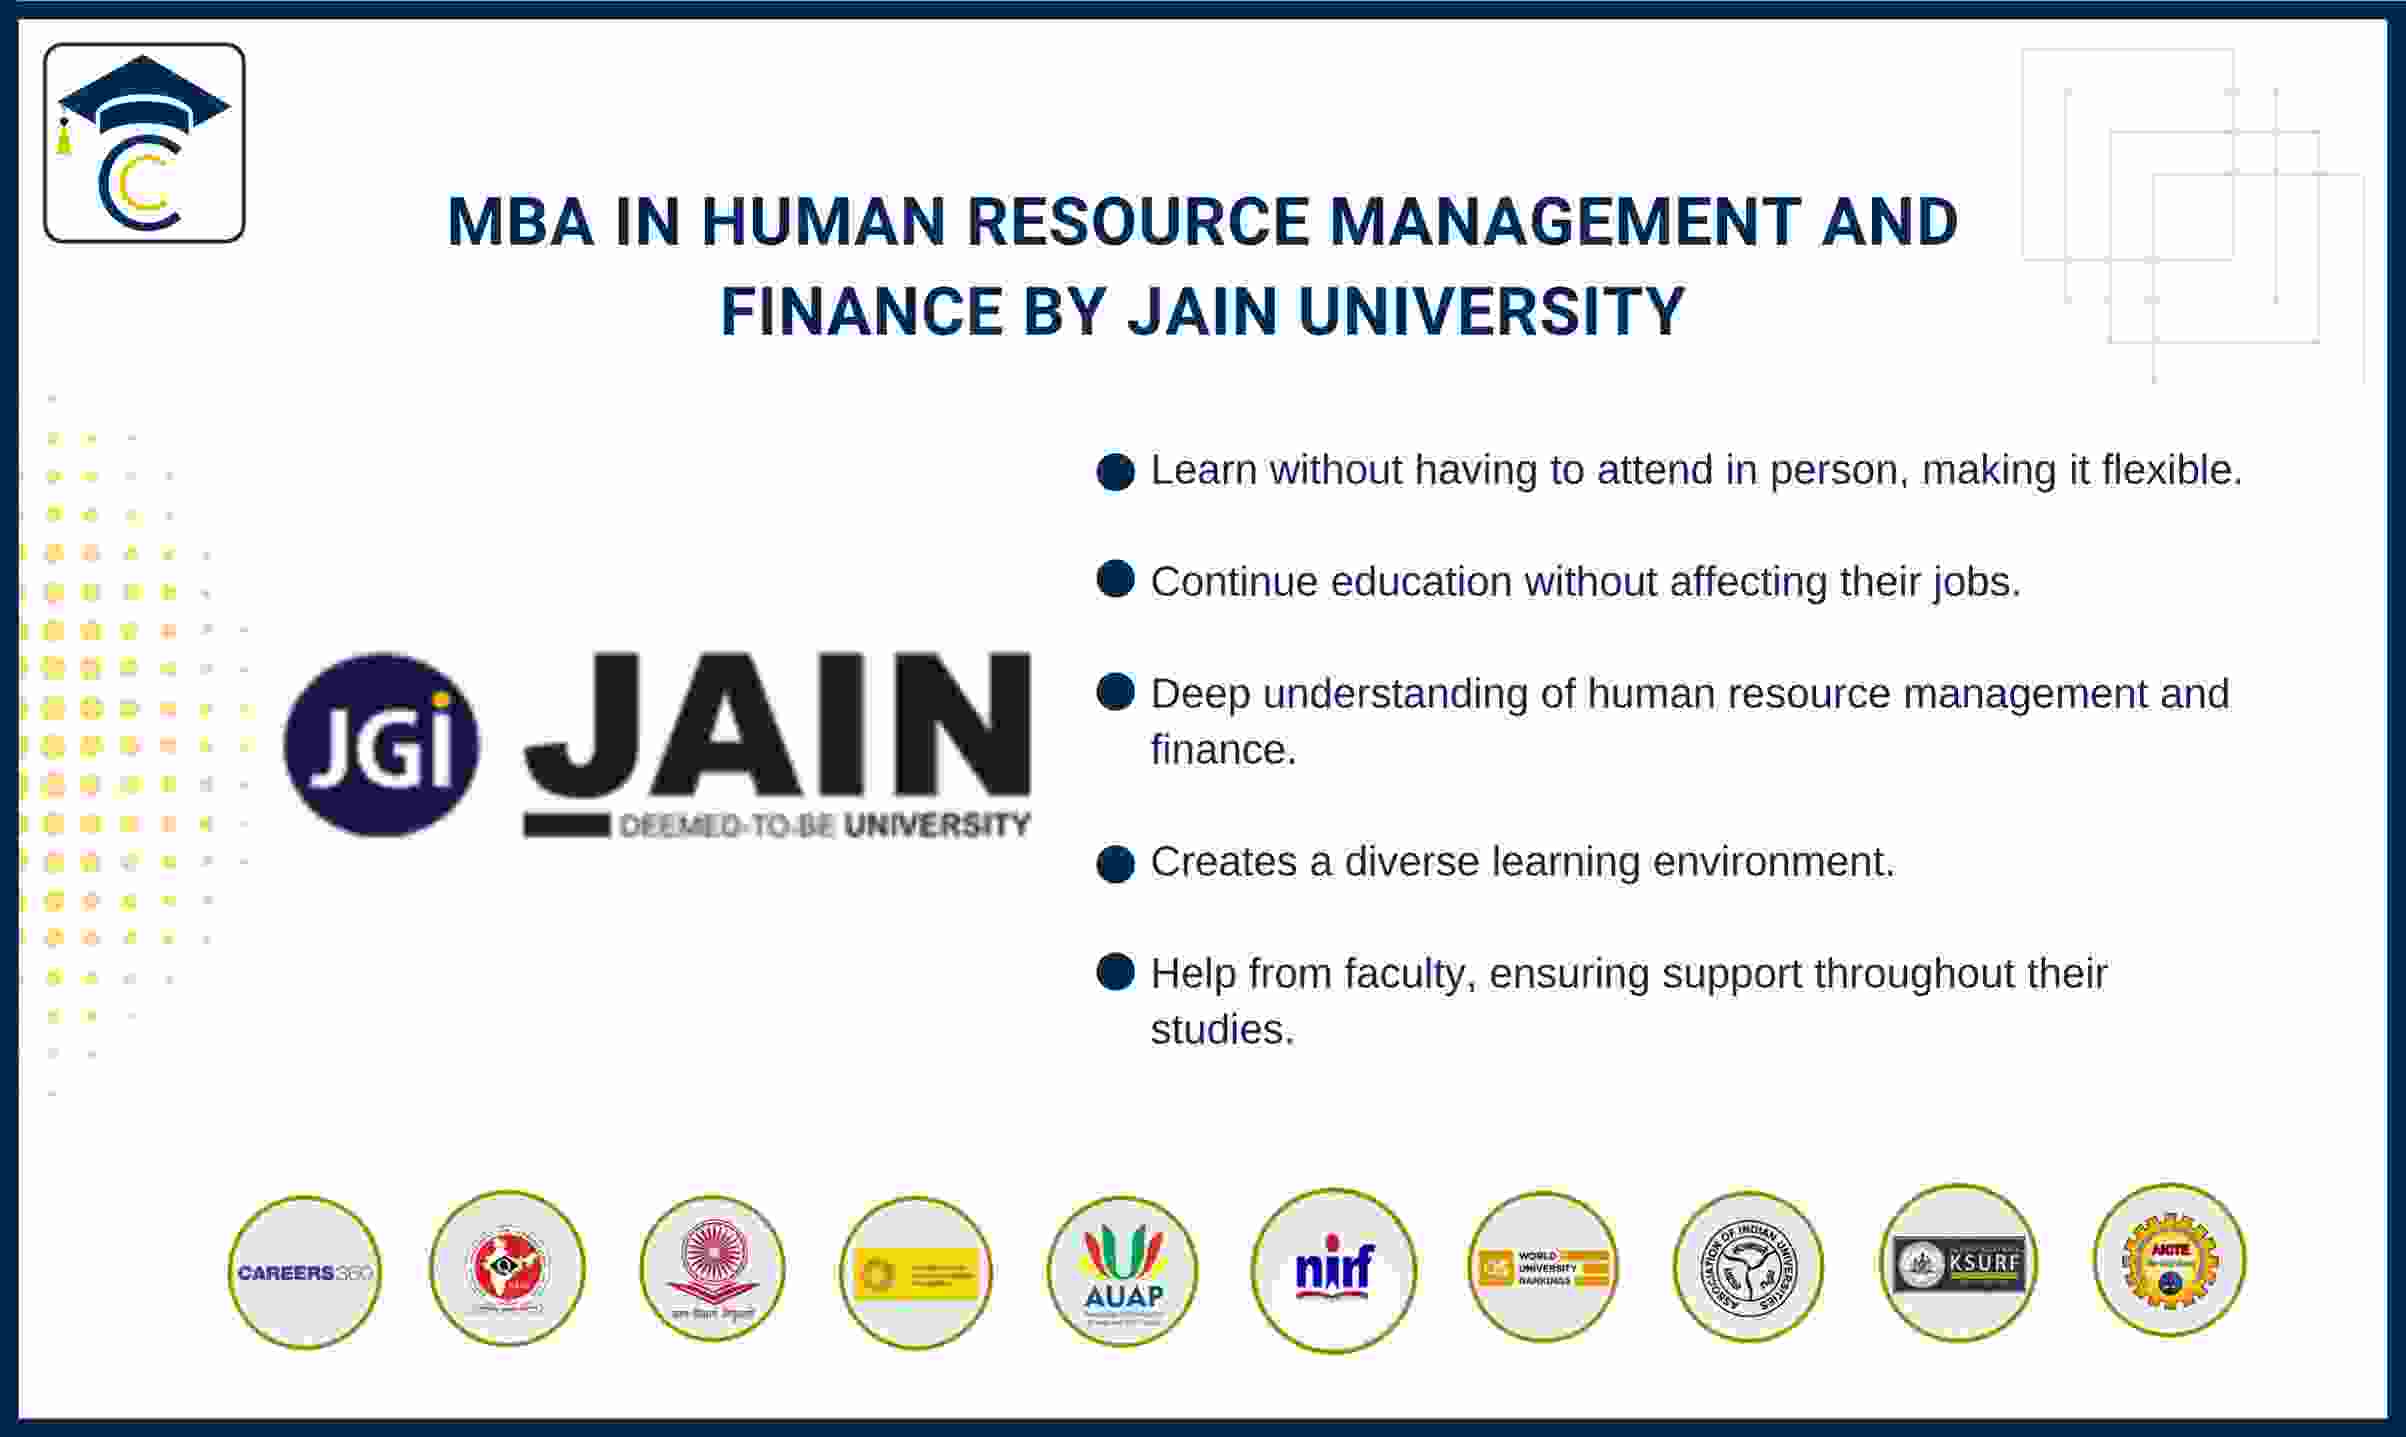 mba-in-human-resource-management-and-finance-jain-university